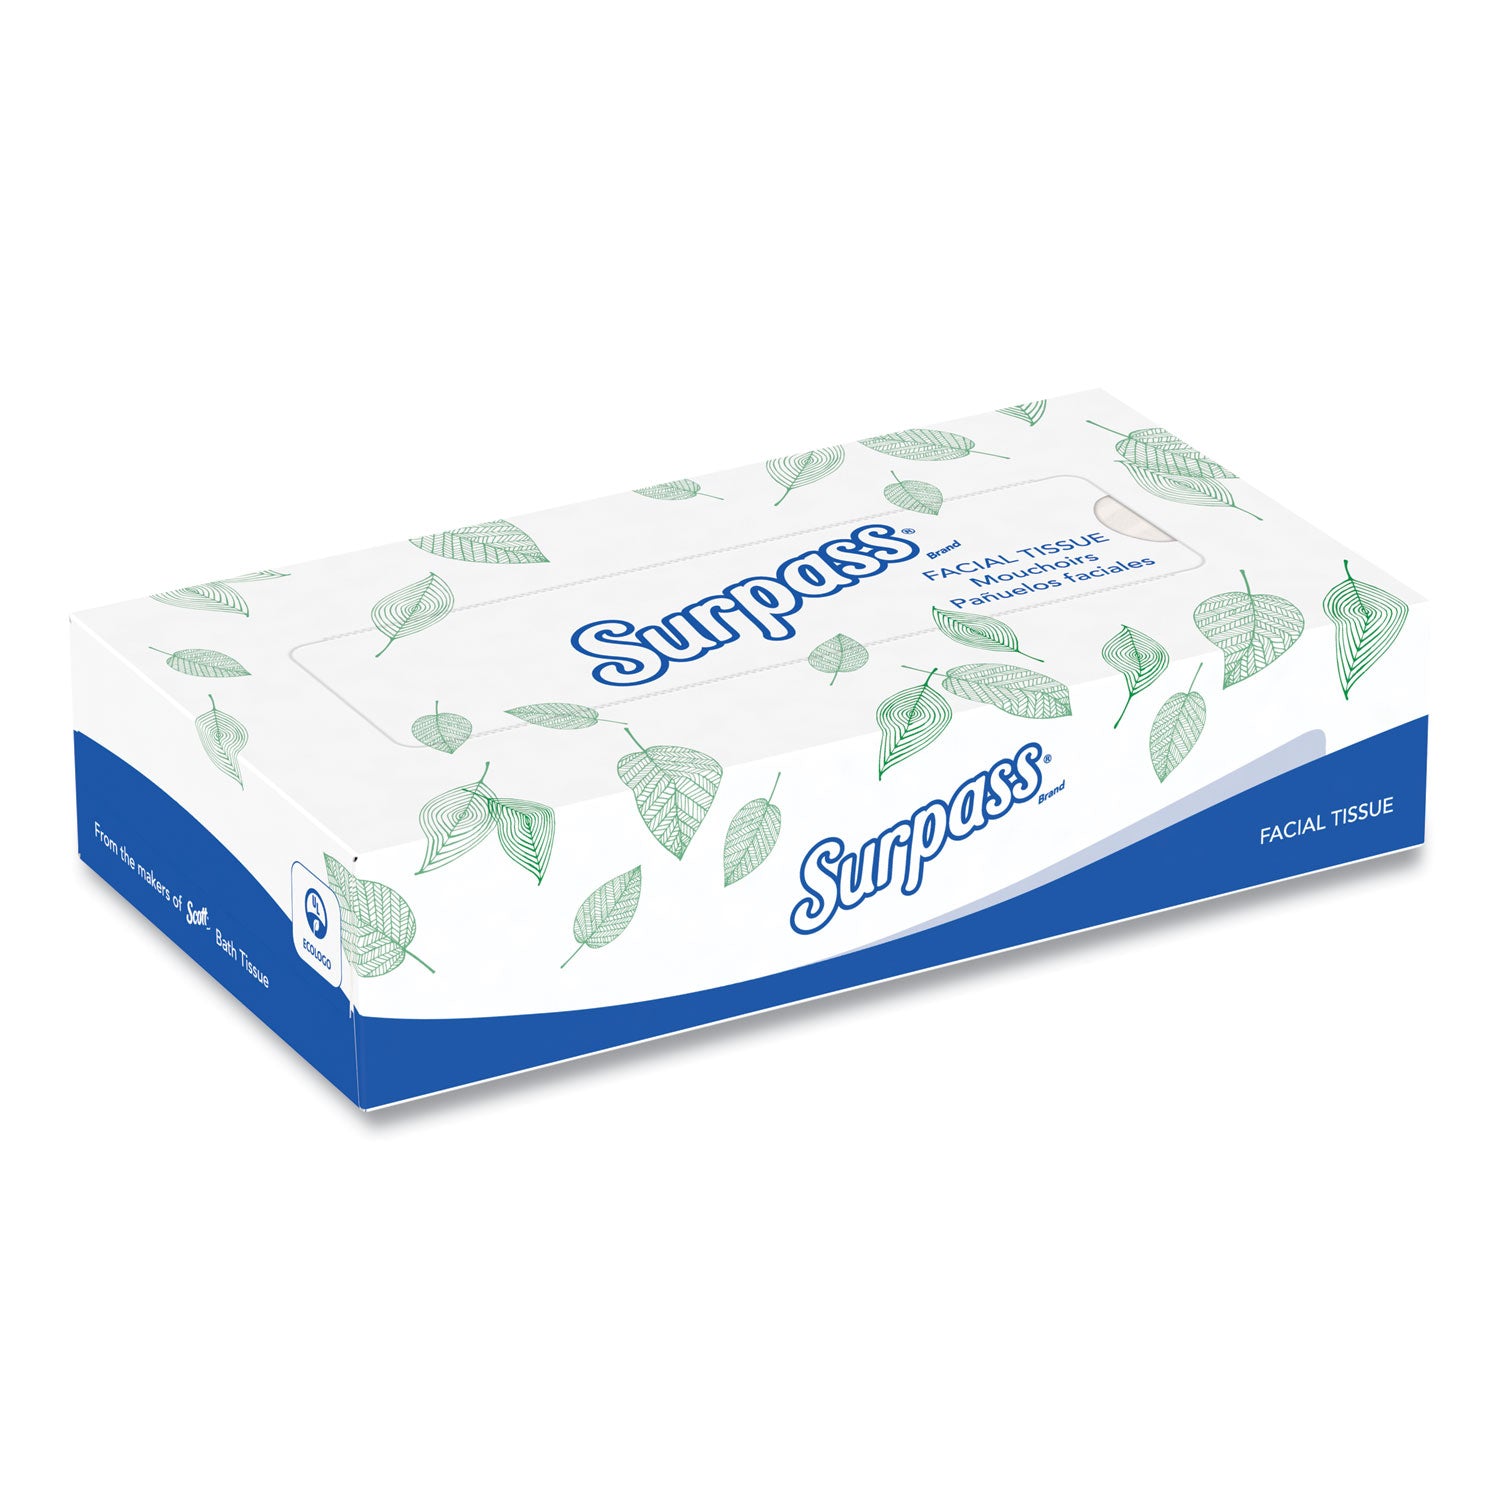 Facial Tissue for Business, 2-Ply, White,125 Sheets/Box, 60 Boxes/Carton - 